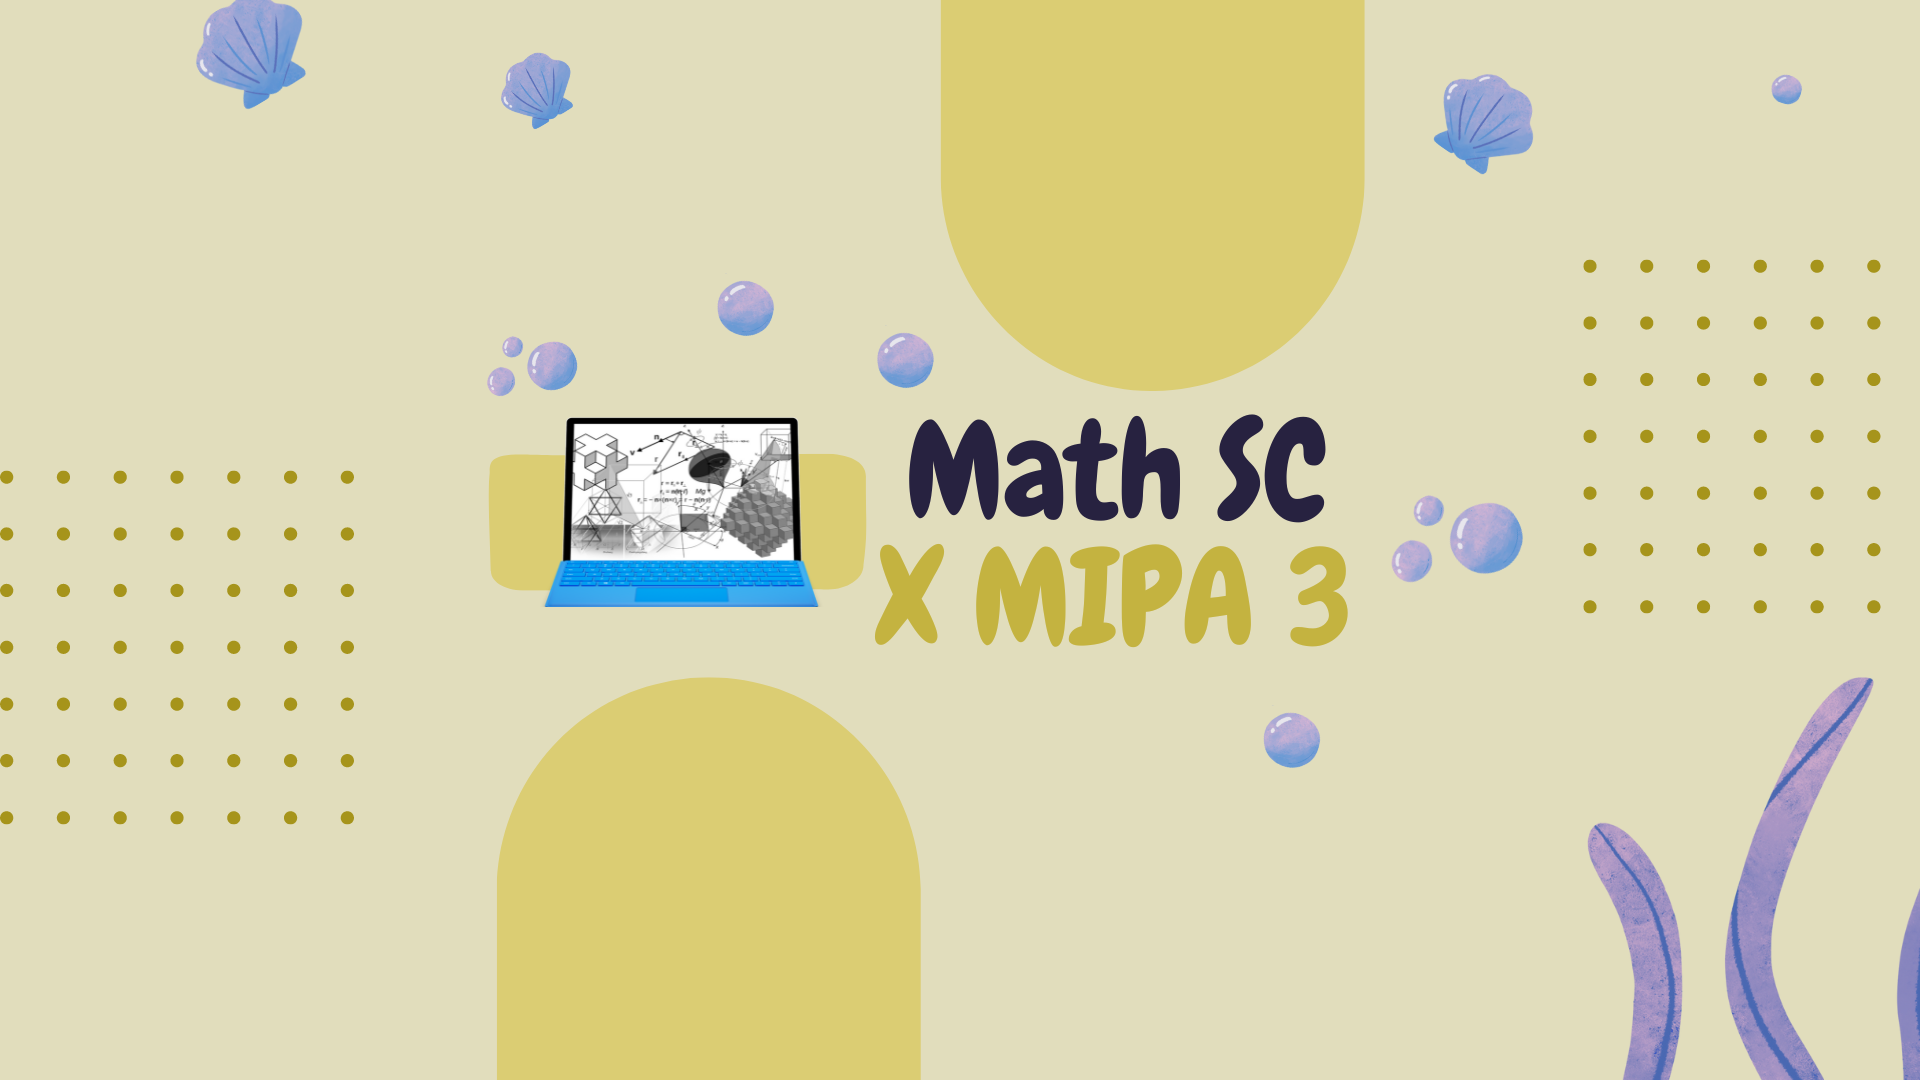 MATH SCIENCE X MIPA 3